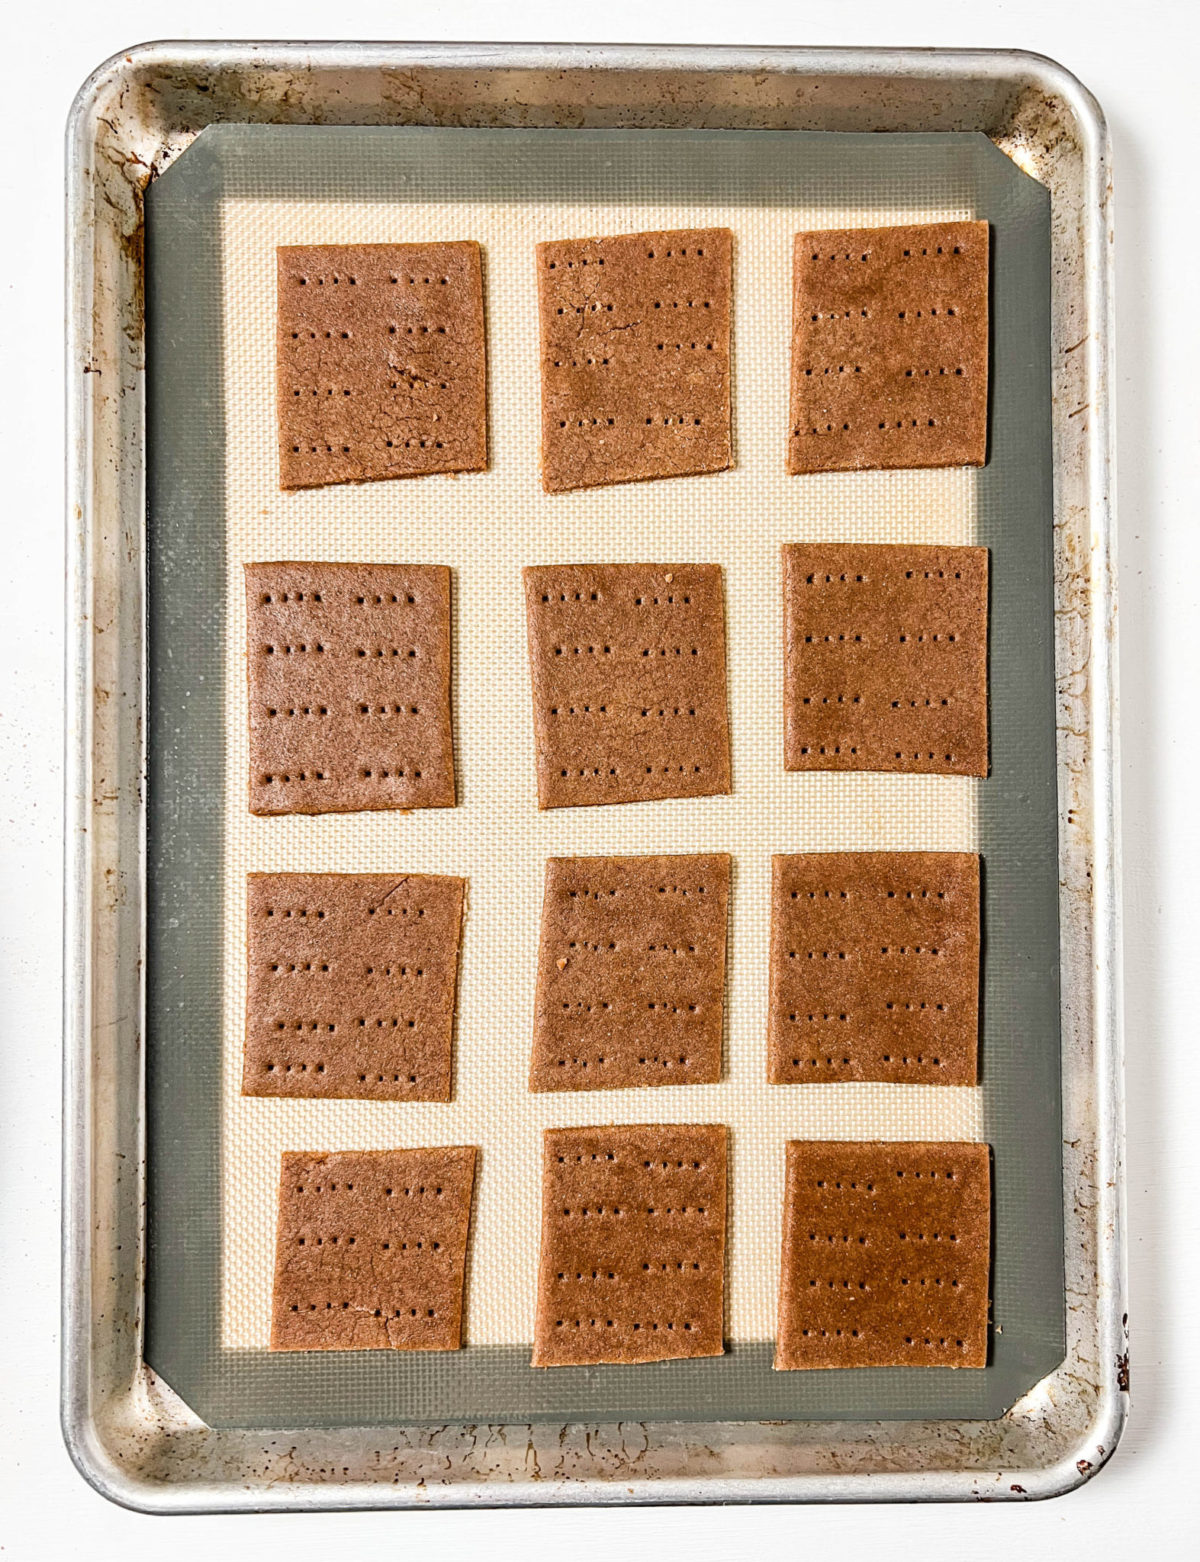 Overhead shot of graham crackers on a baking sheet before baking. 